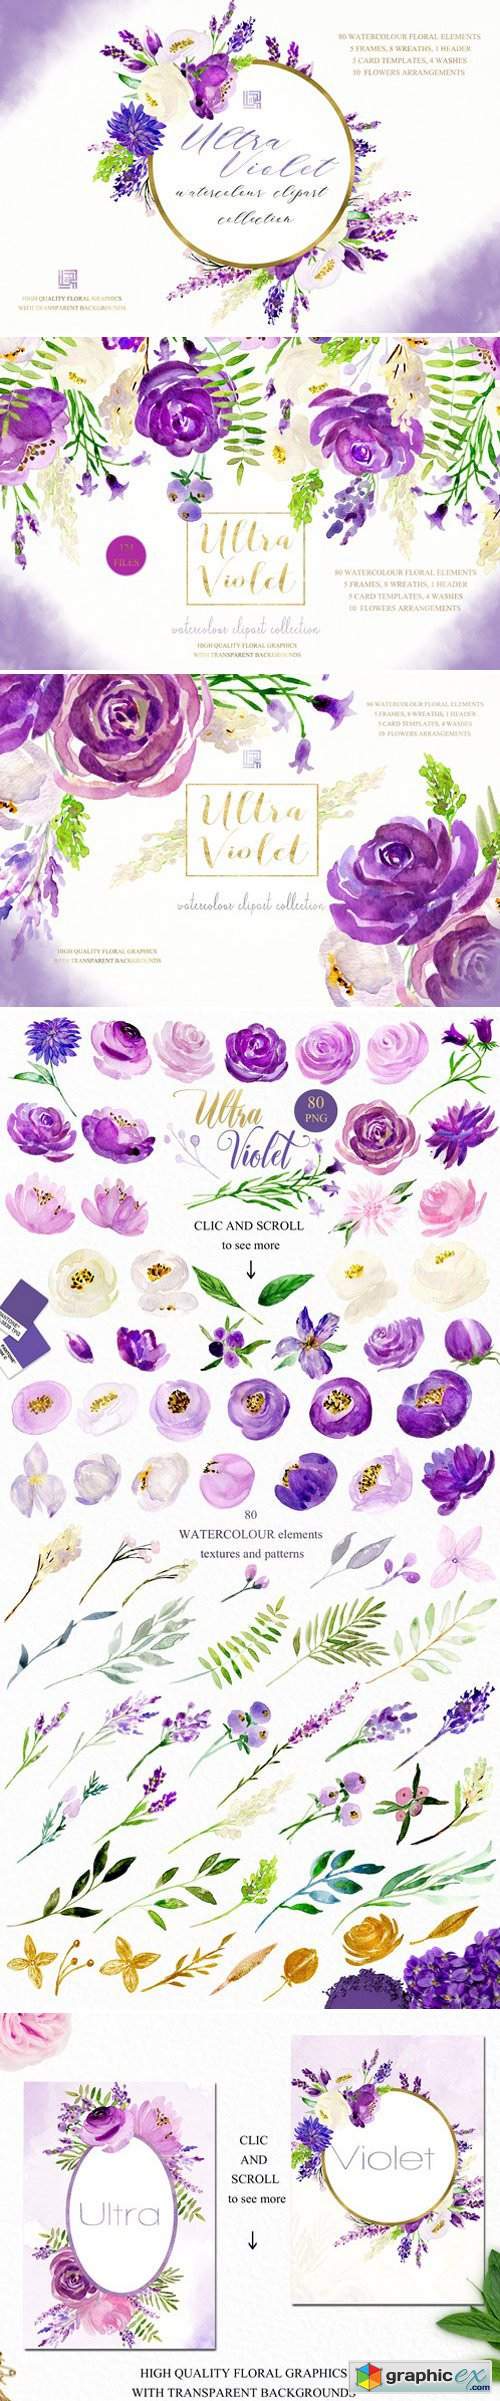 Ultra violet watercolor flowers